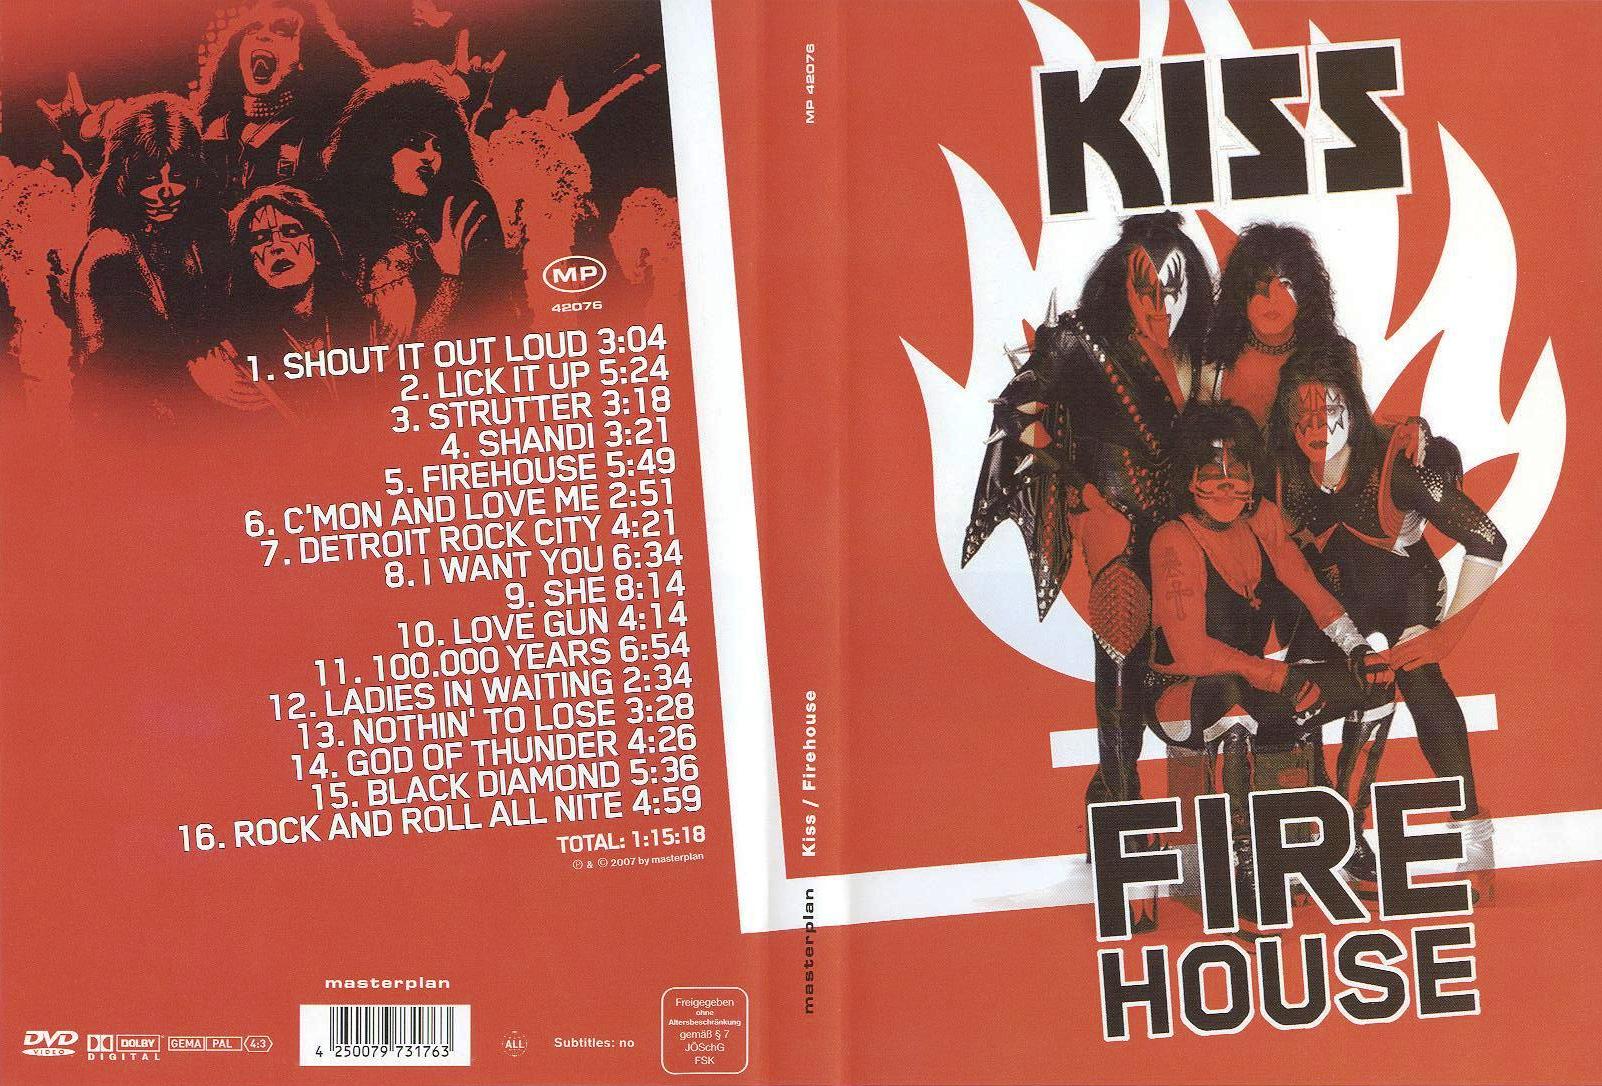 Jaquette DVD KISS - Fire house